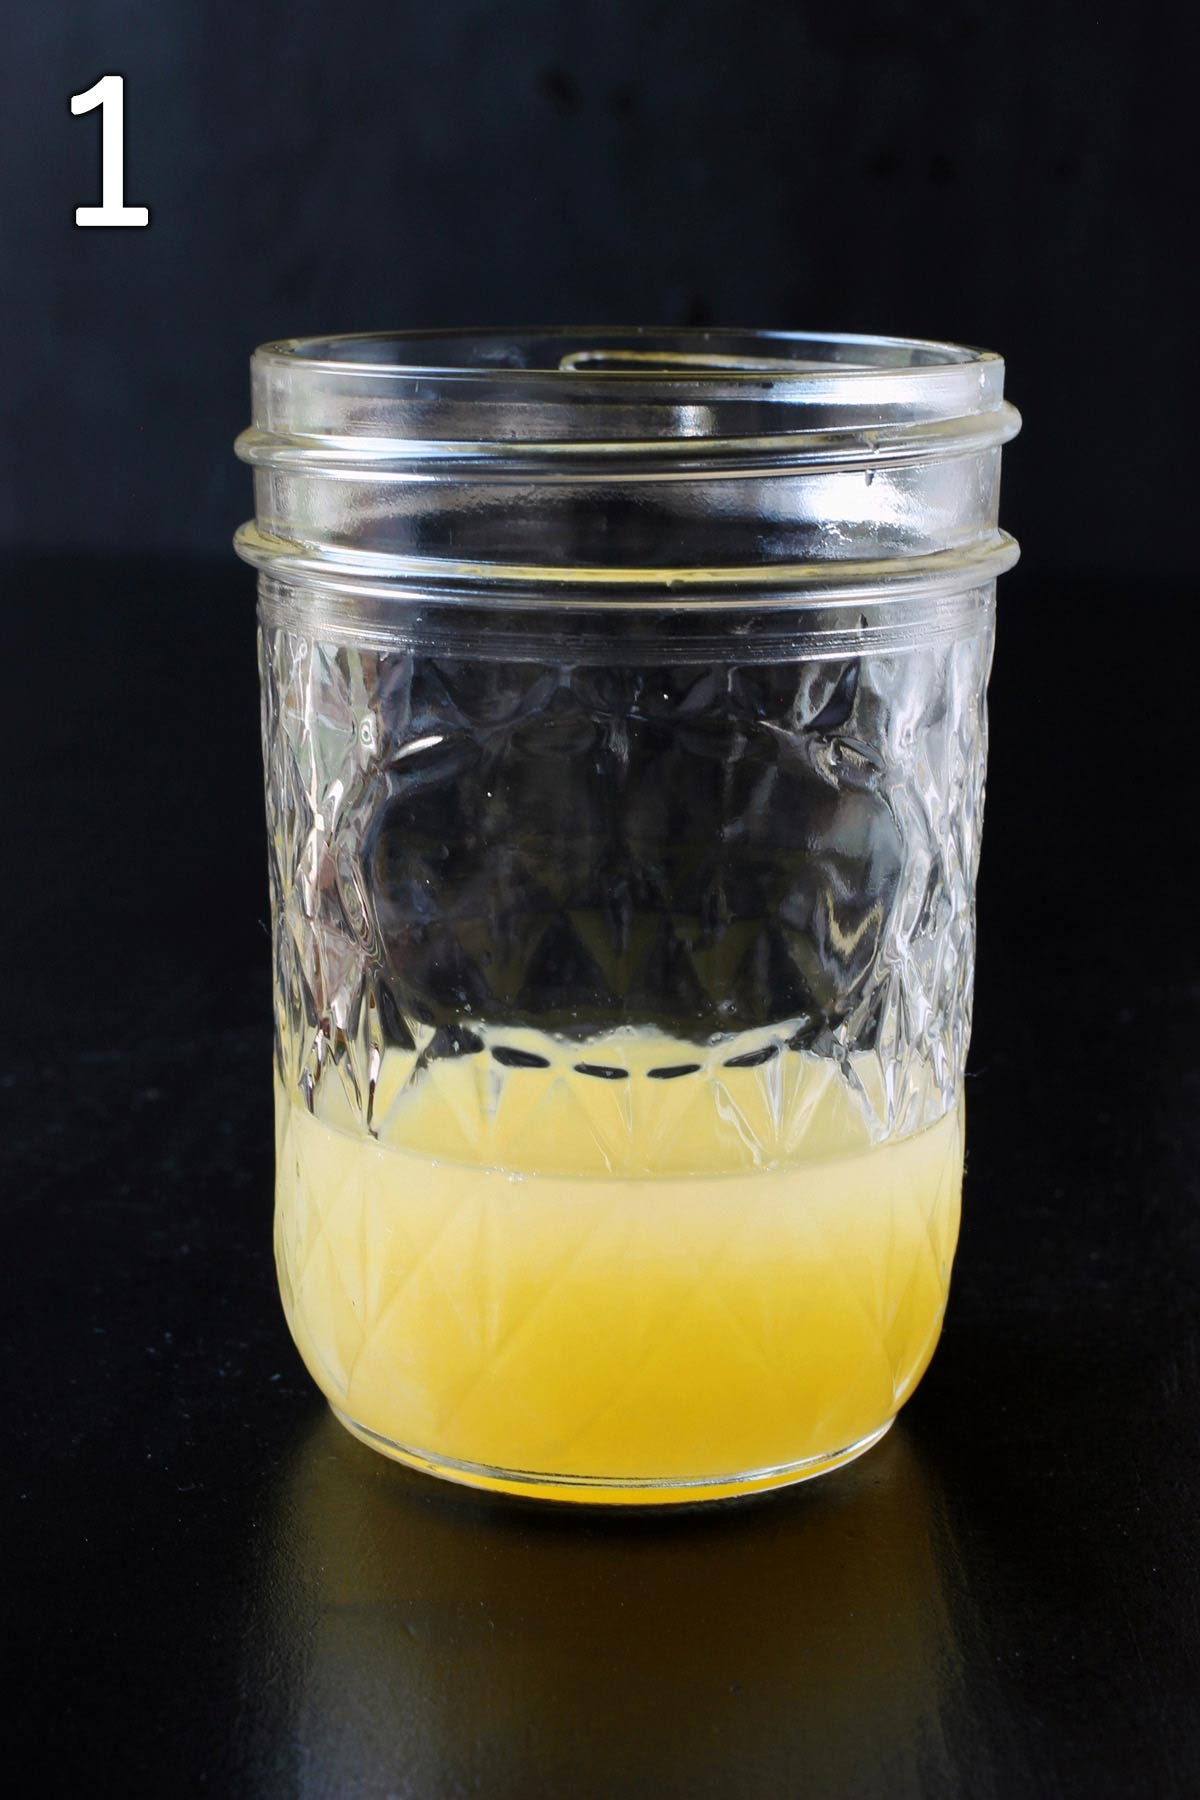 lemon juice in the jar.